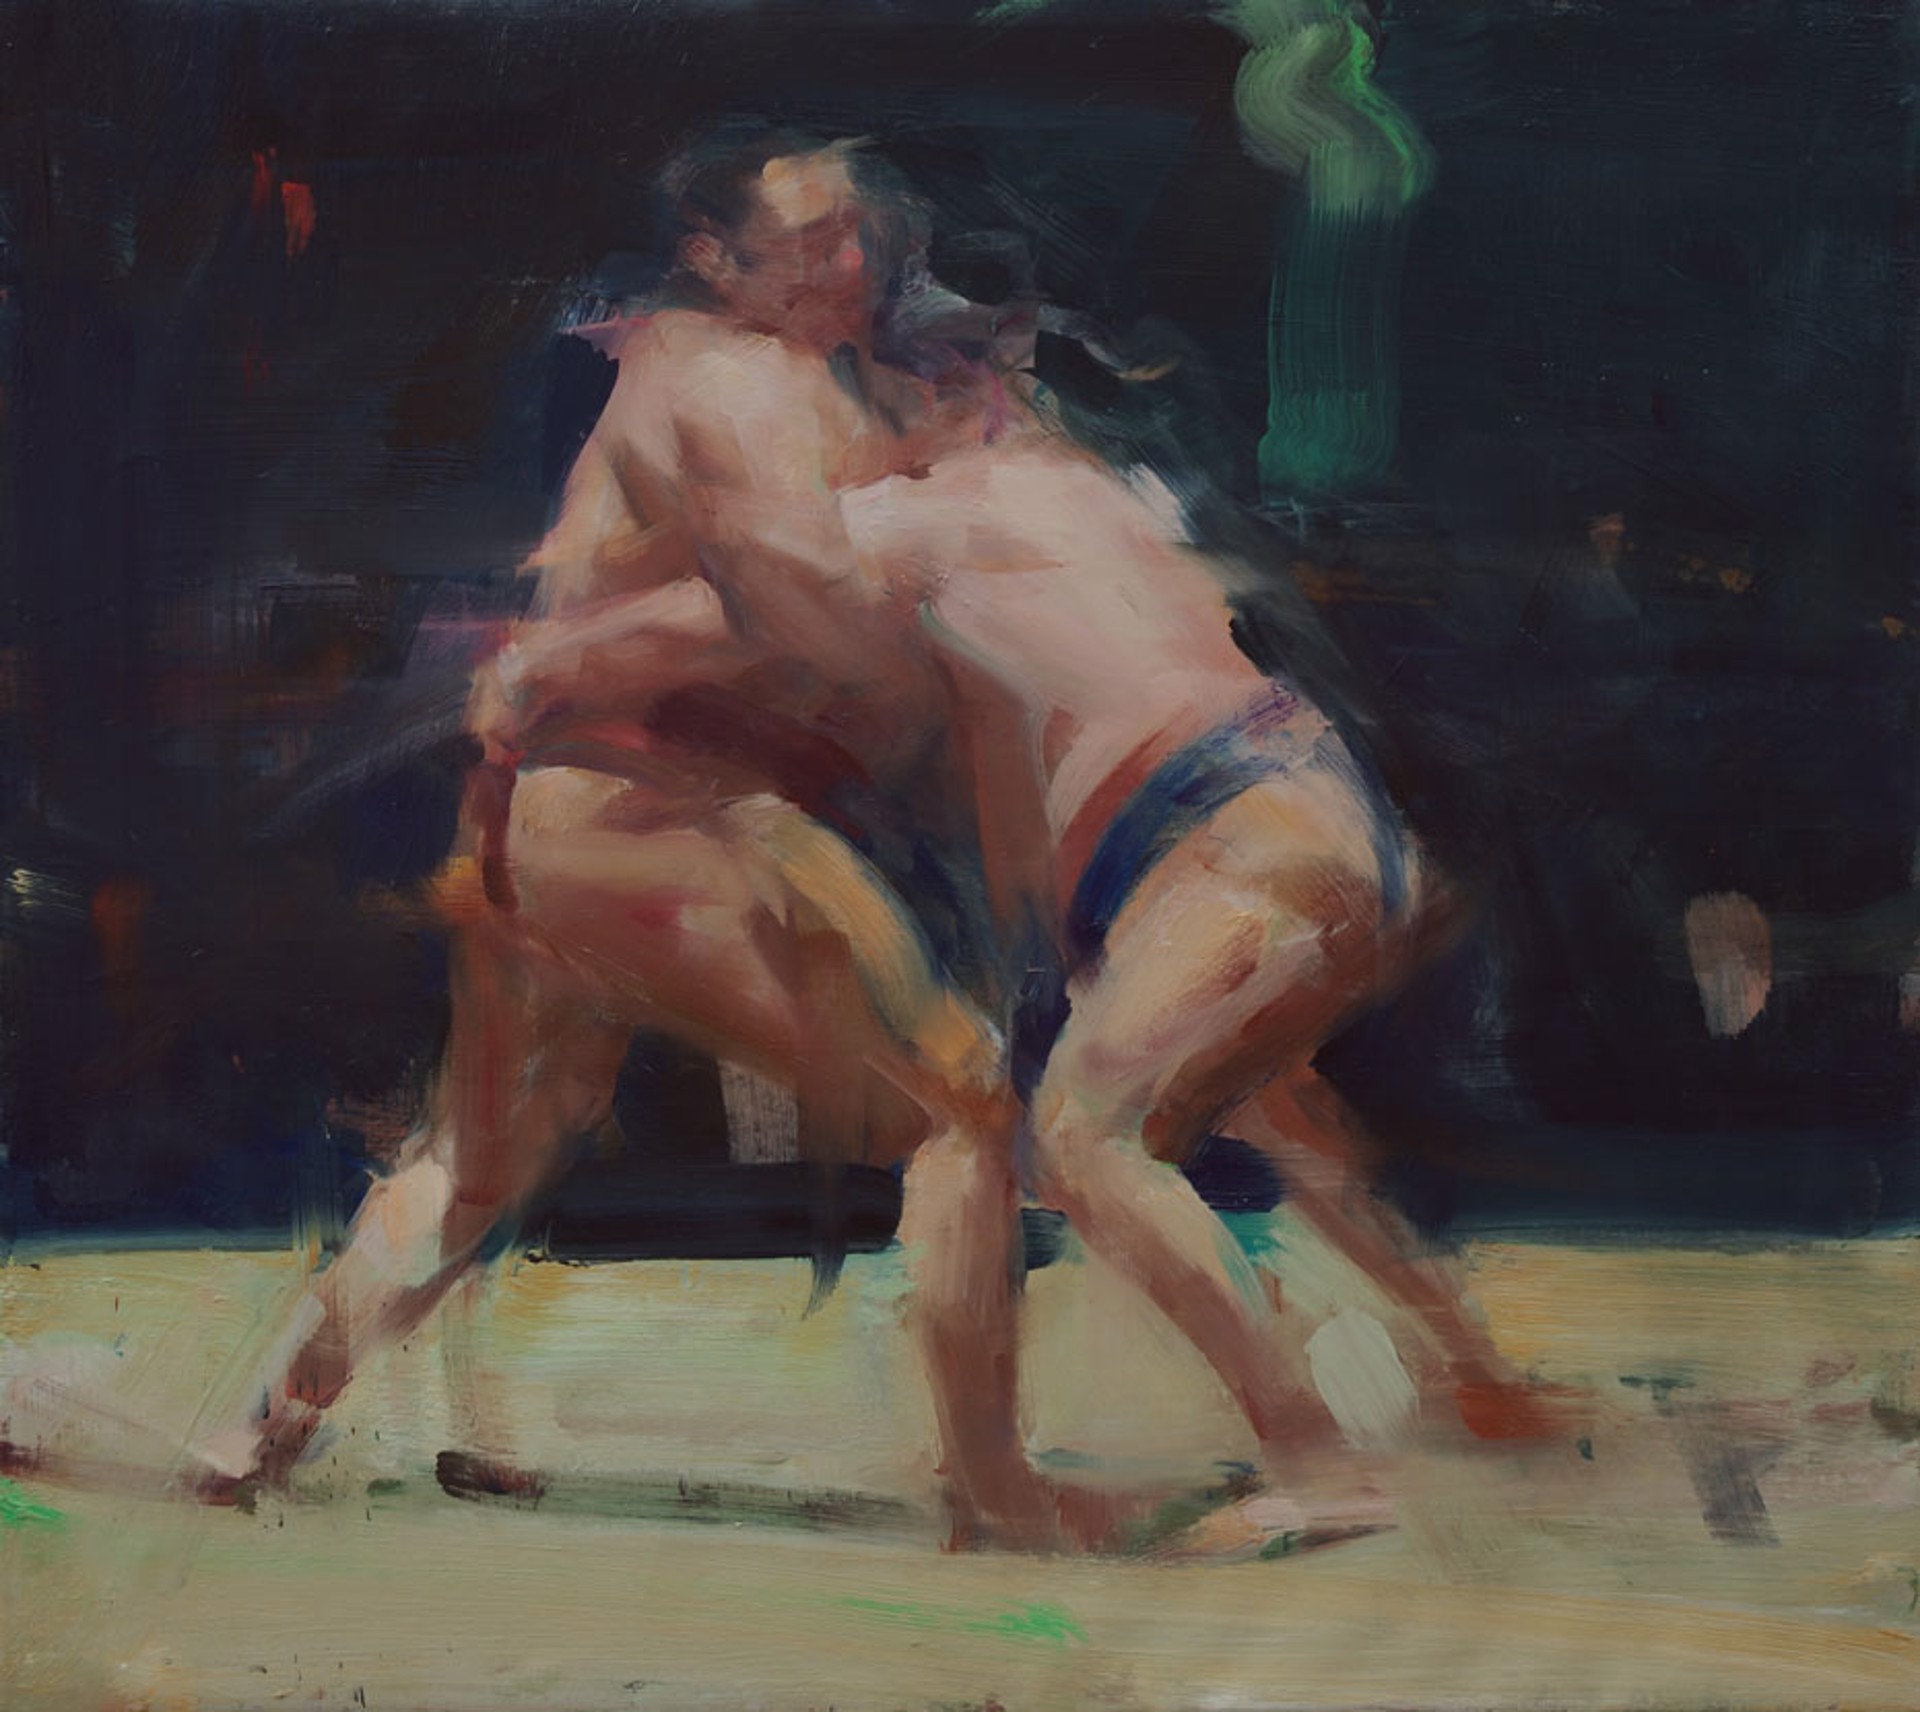 Two Wrestlers by David Shevlino